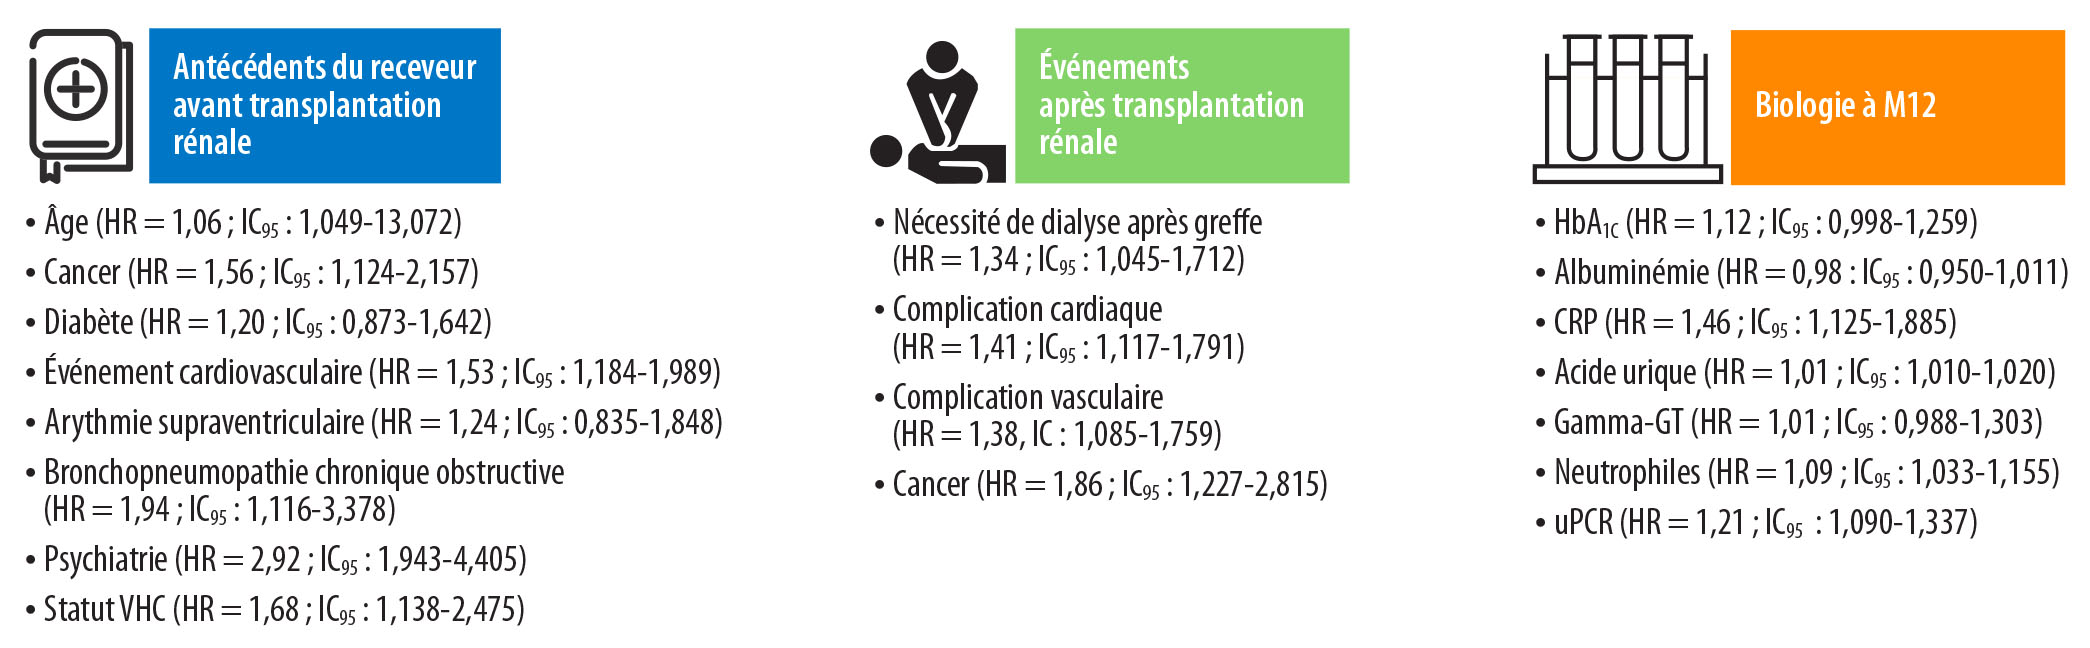 Transplantation rénale - Figure 12